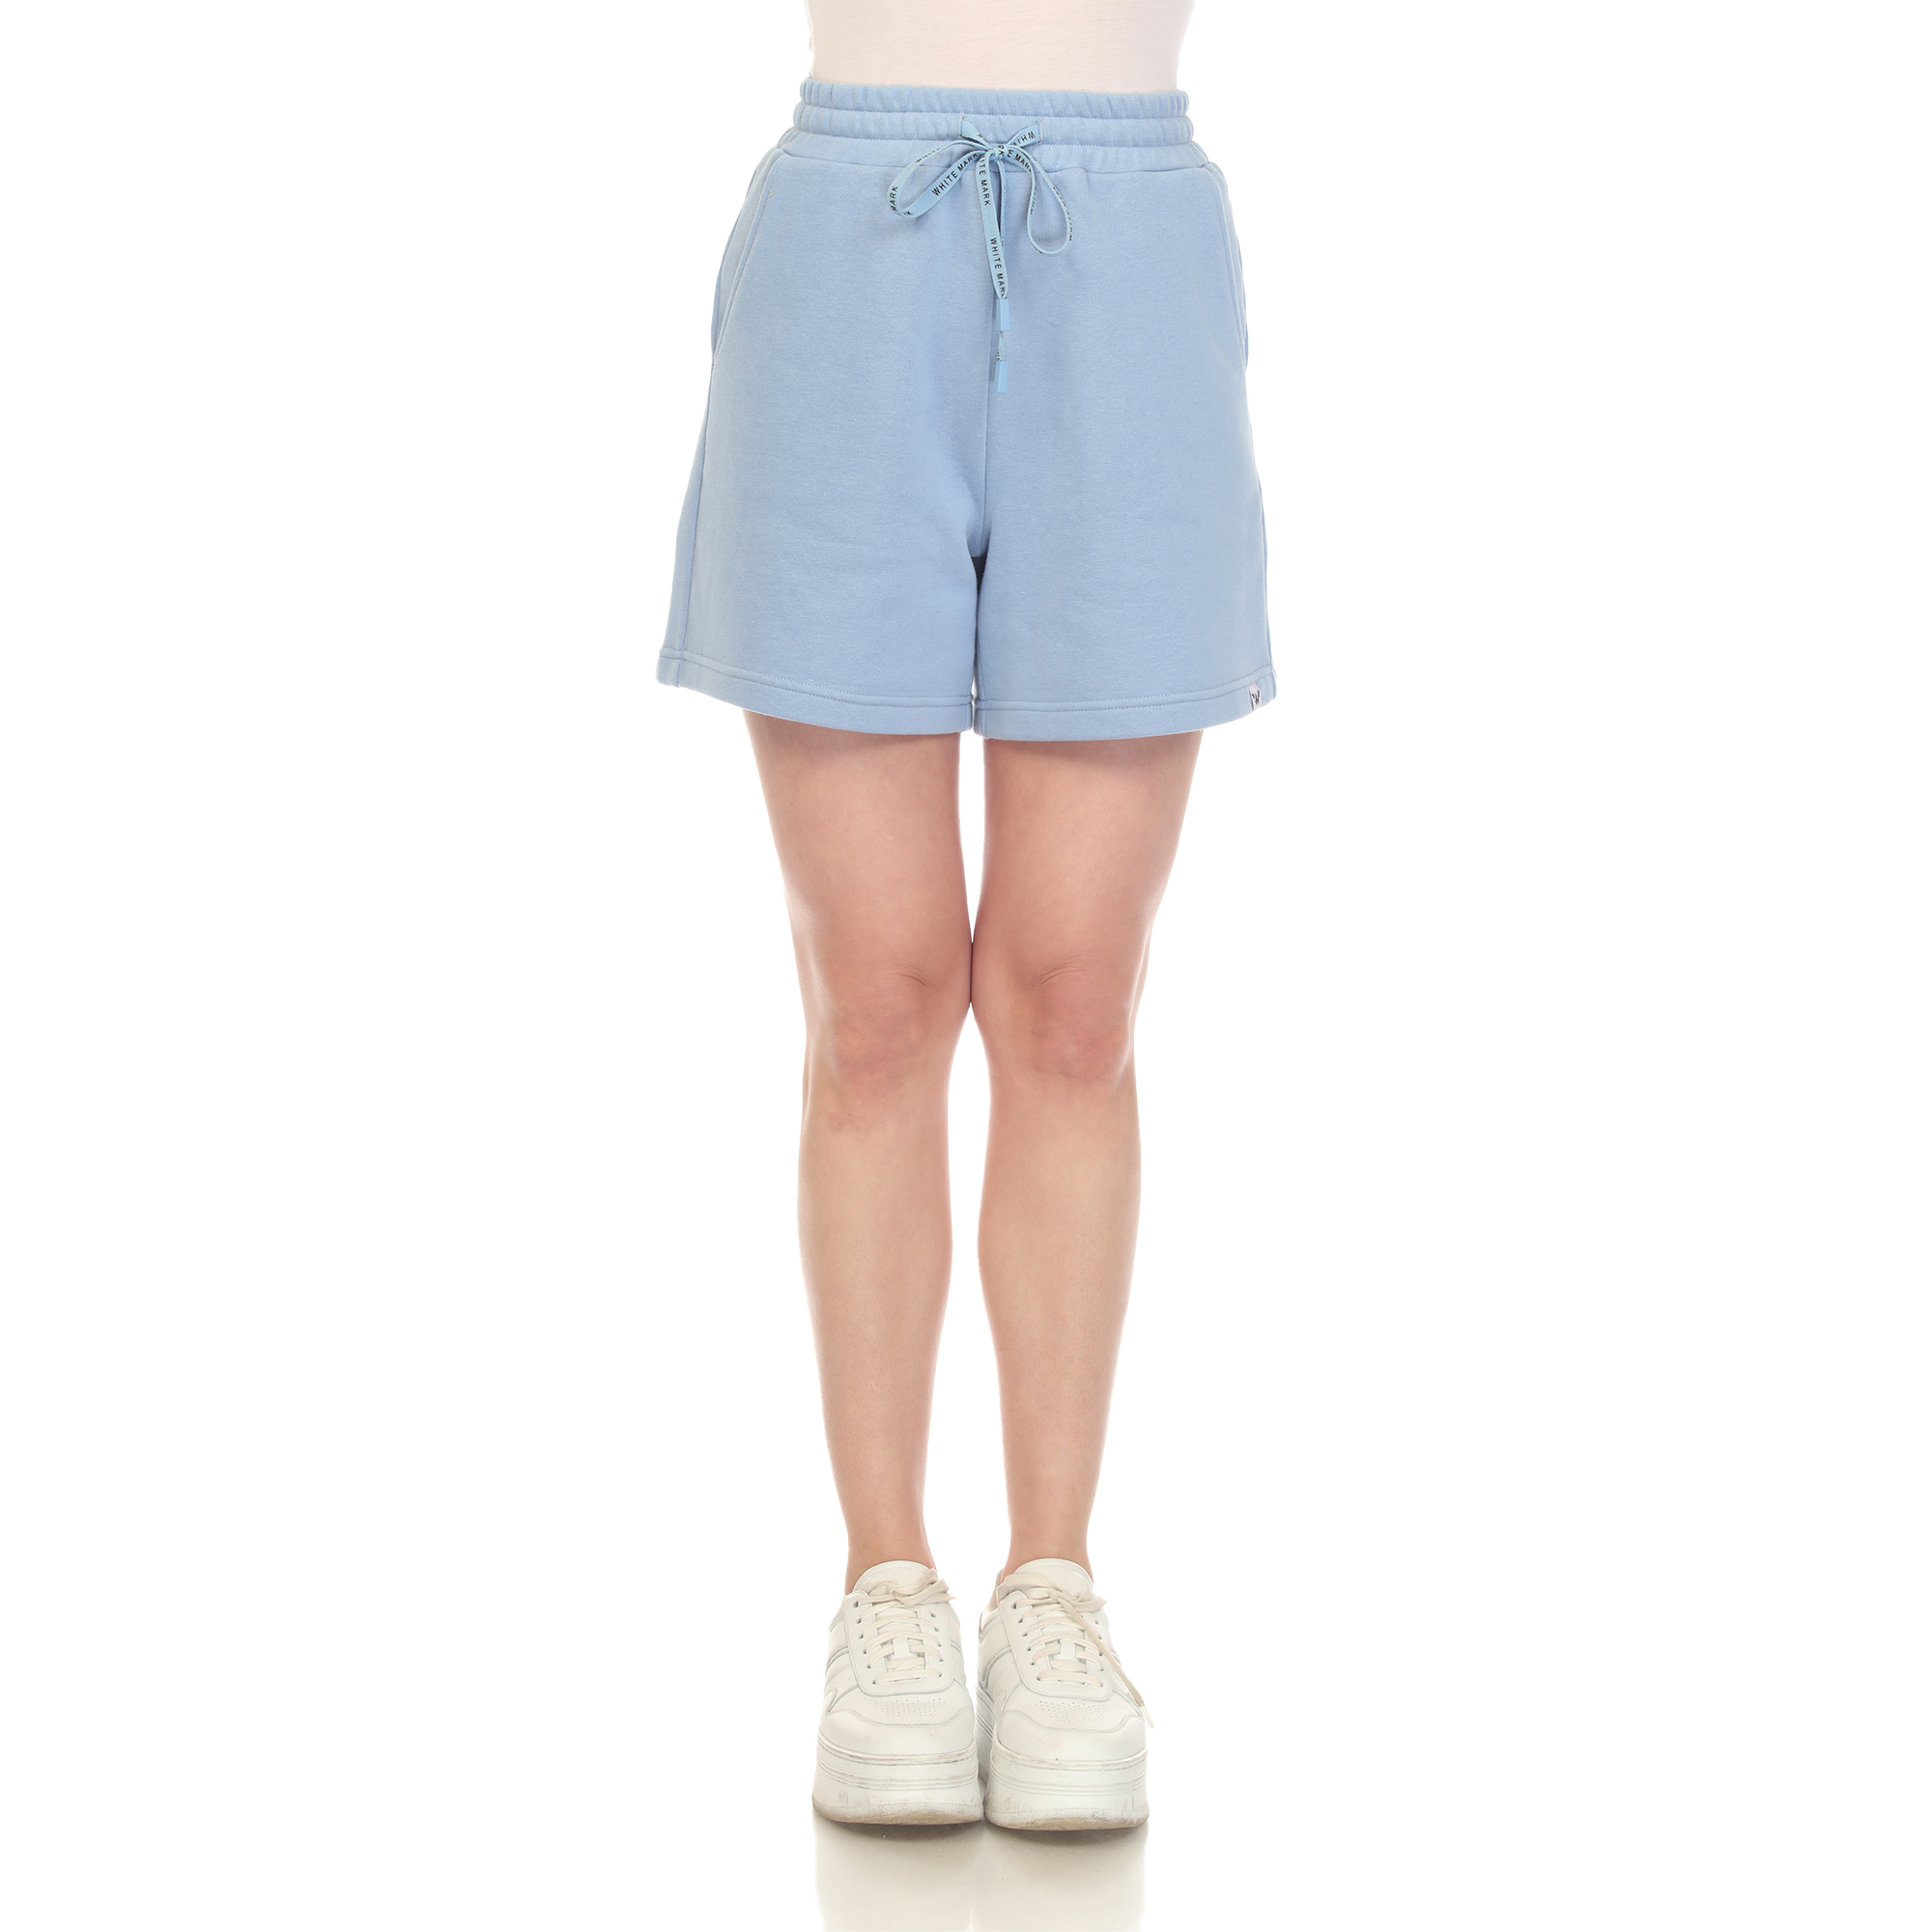 White Mark Women's Super Soft Drawstring Waistband Sweat Shorts - Denim Blue, Large